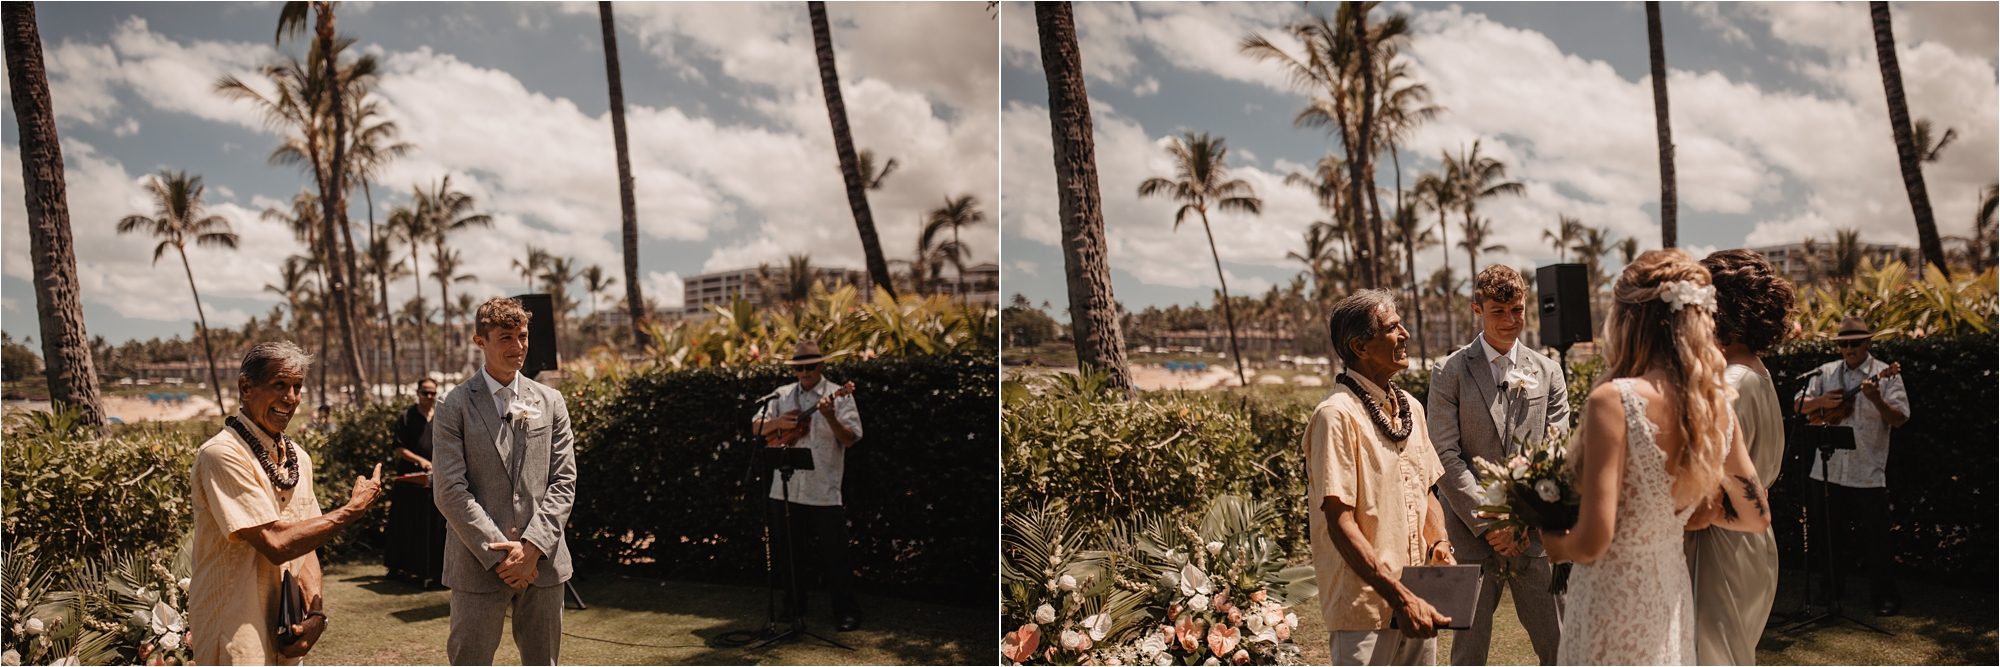 maui-hawaii-intimate-tropical-wedding_0028.jpg